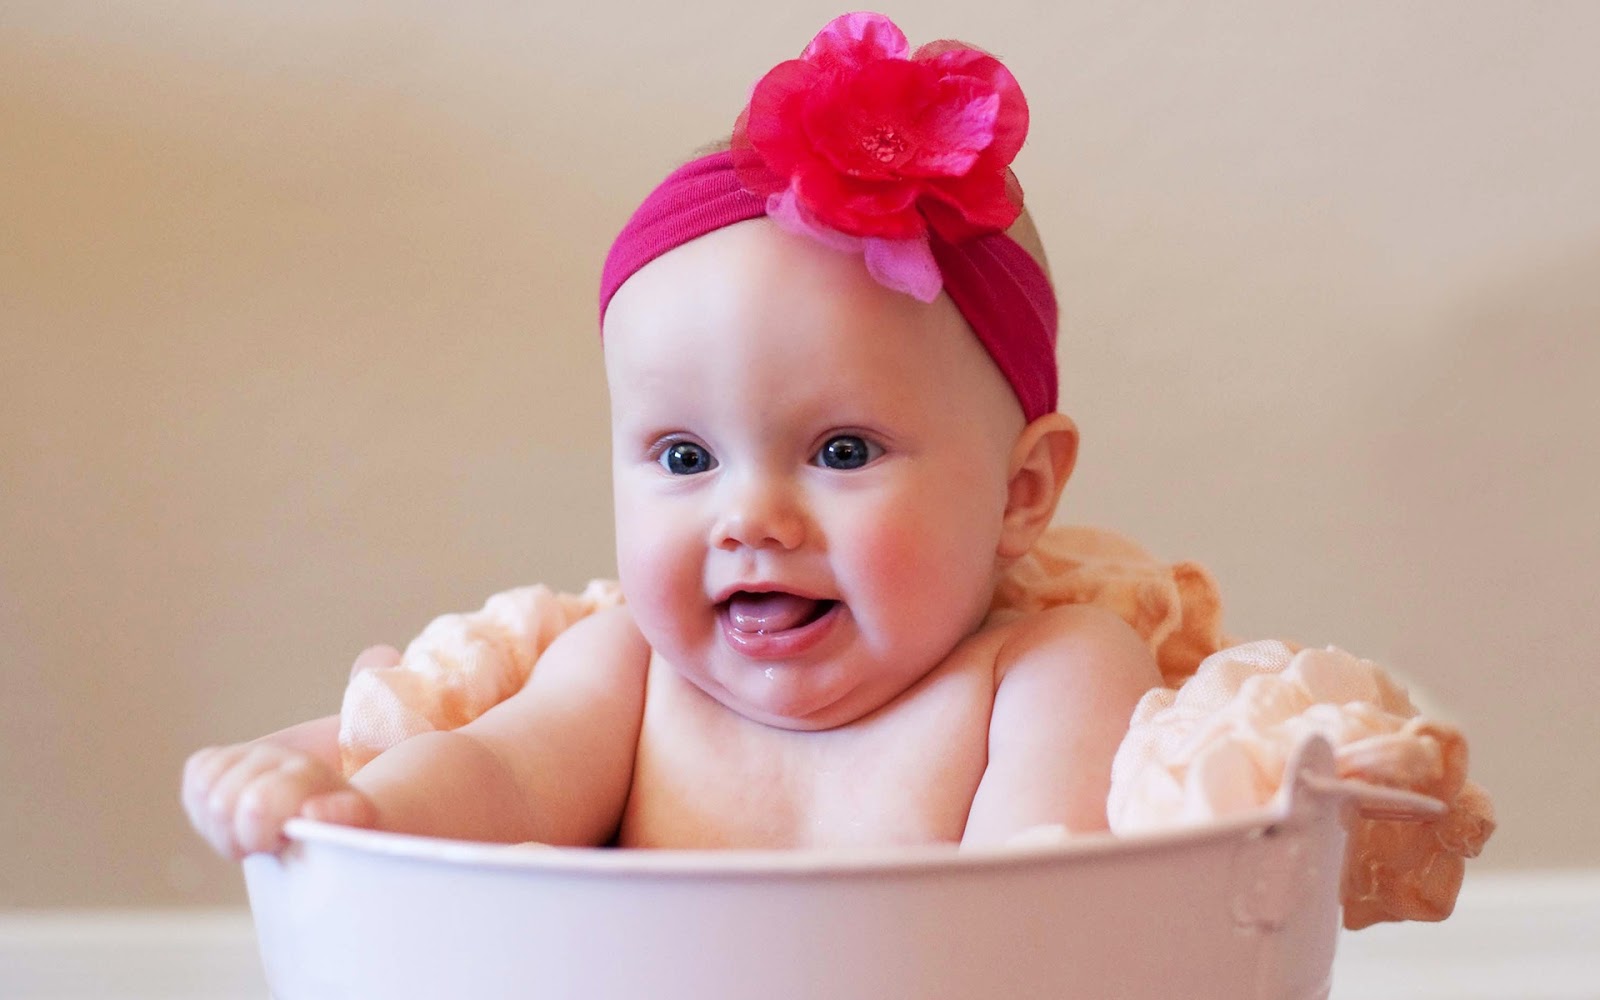 HD Wallpapers Pics: Download Cute Babies Wallpapers